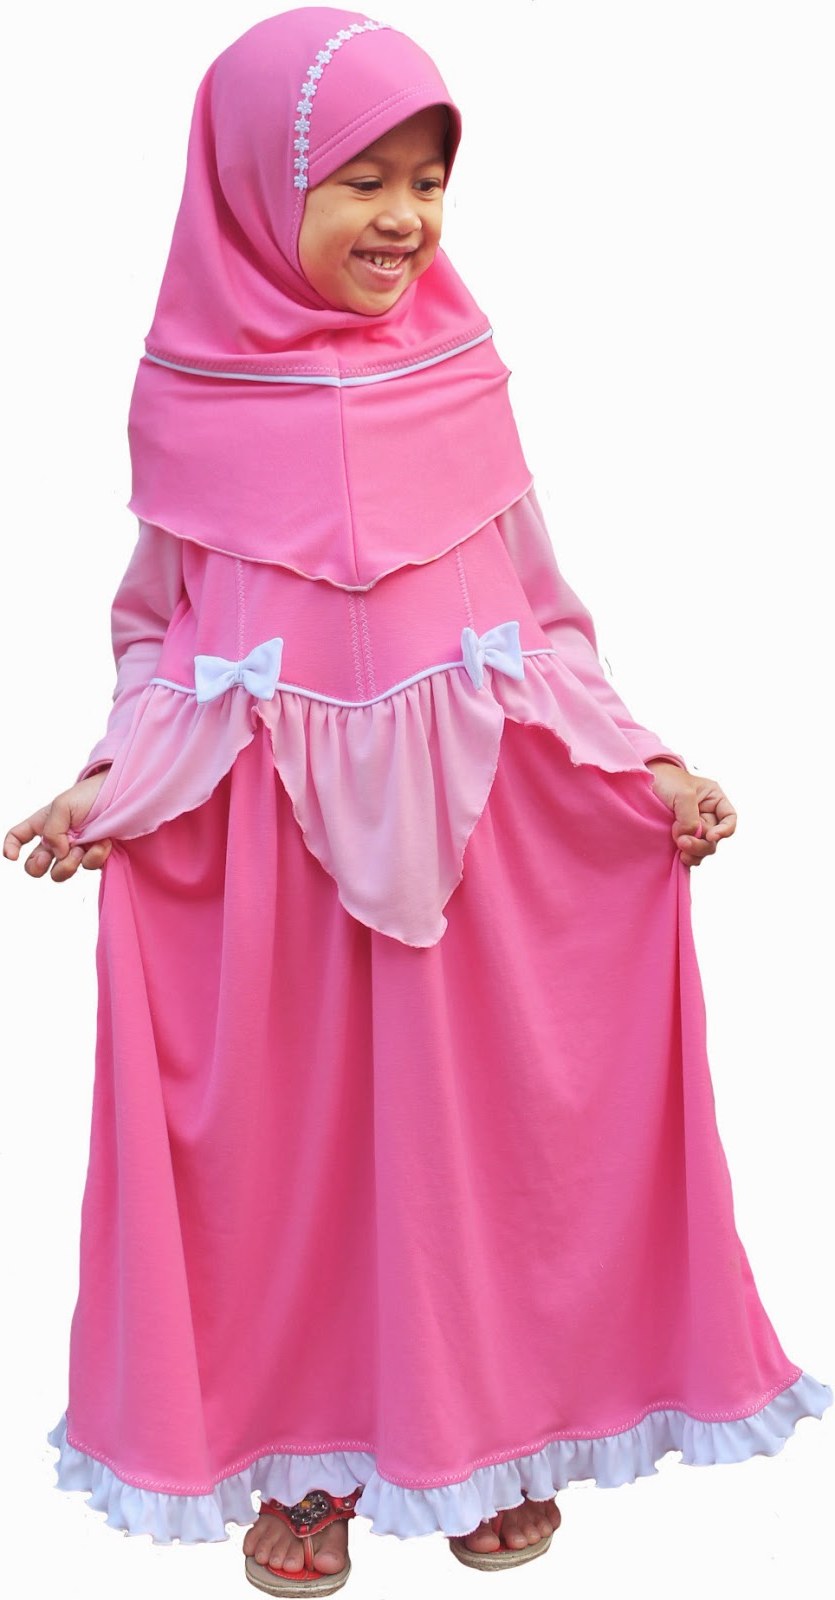 Bentuk Model Baju Lebaran Untuk Anak Perempuan T8dj Model Baju Muslim Anak Perempuan